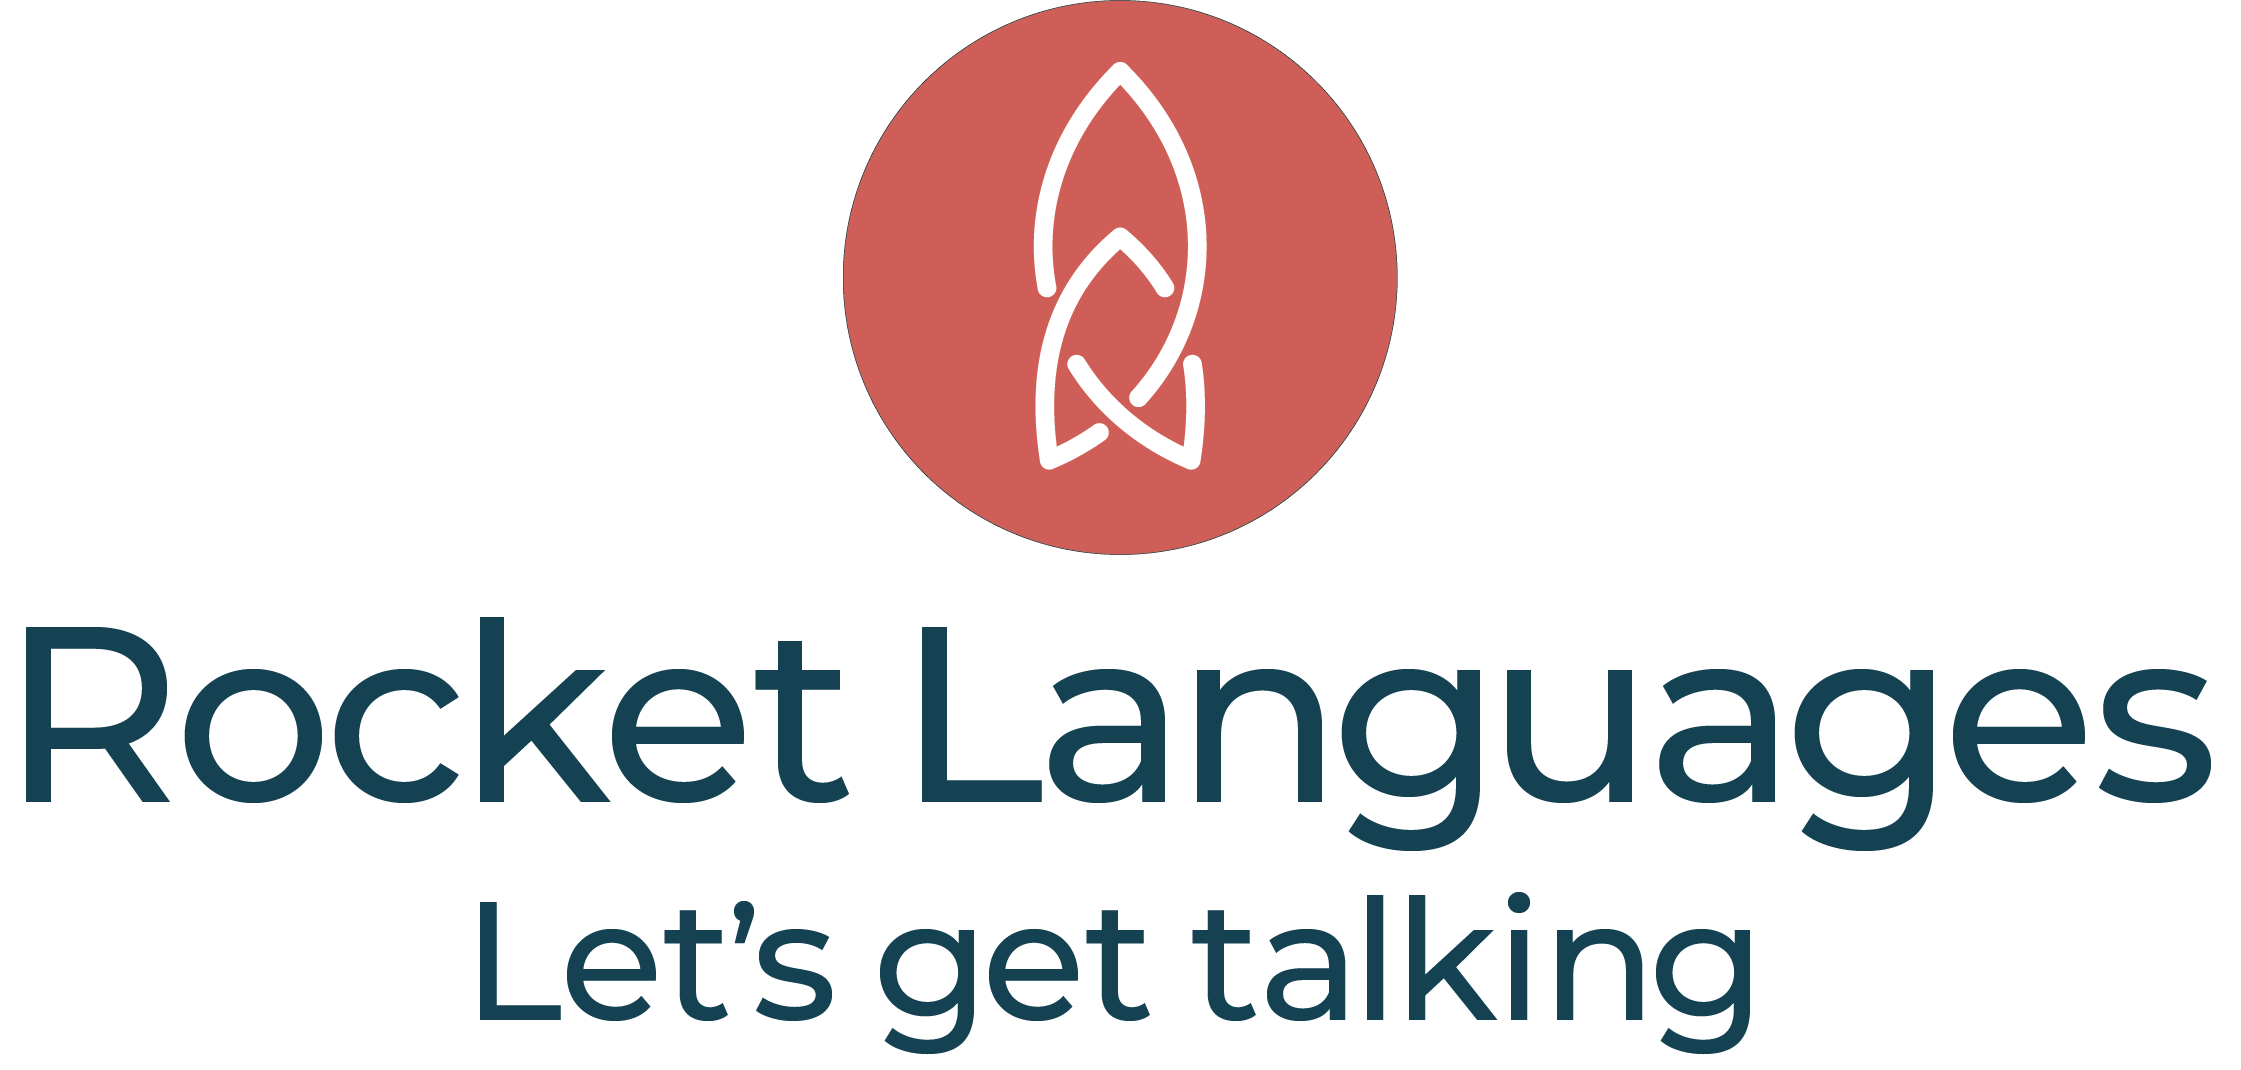 rocket-languages-stacked.png